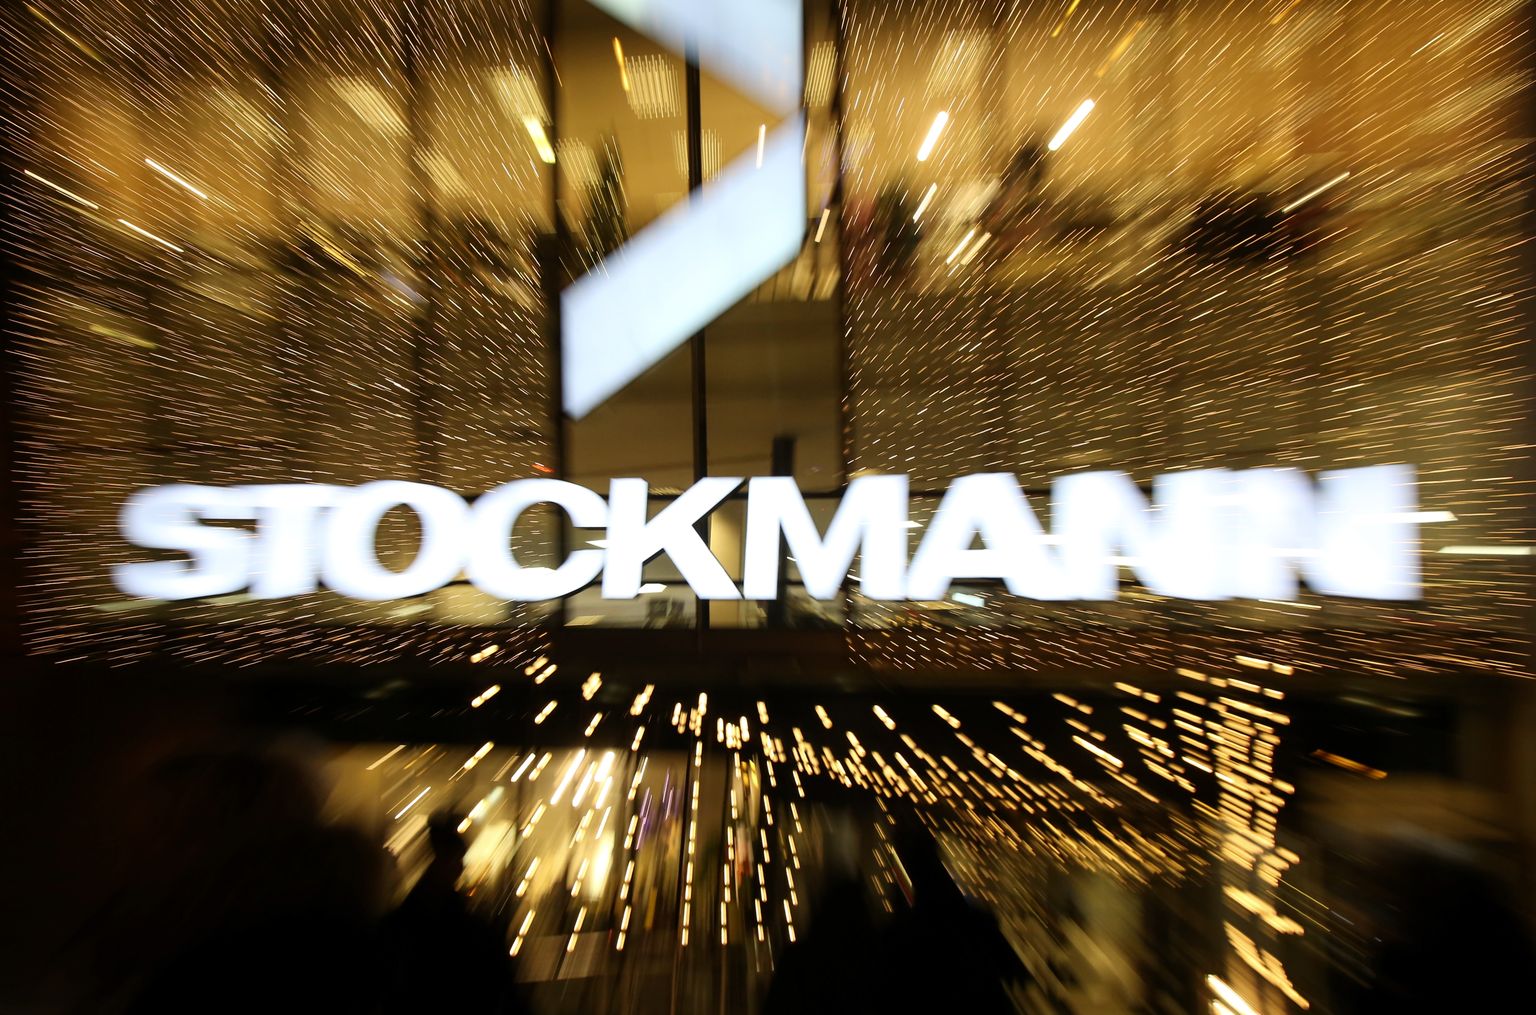 Stockmann.